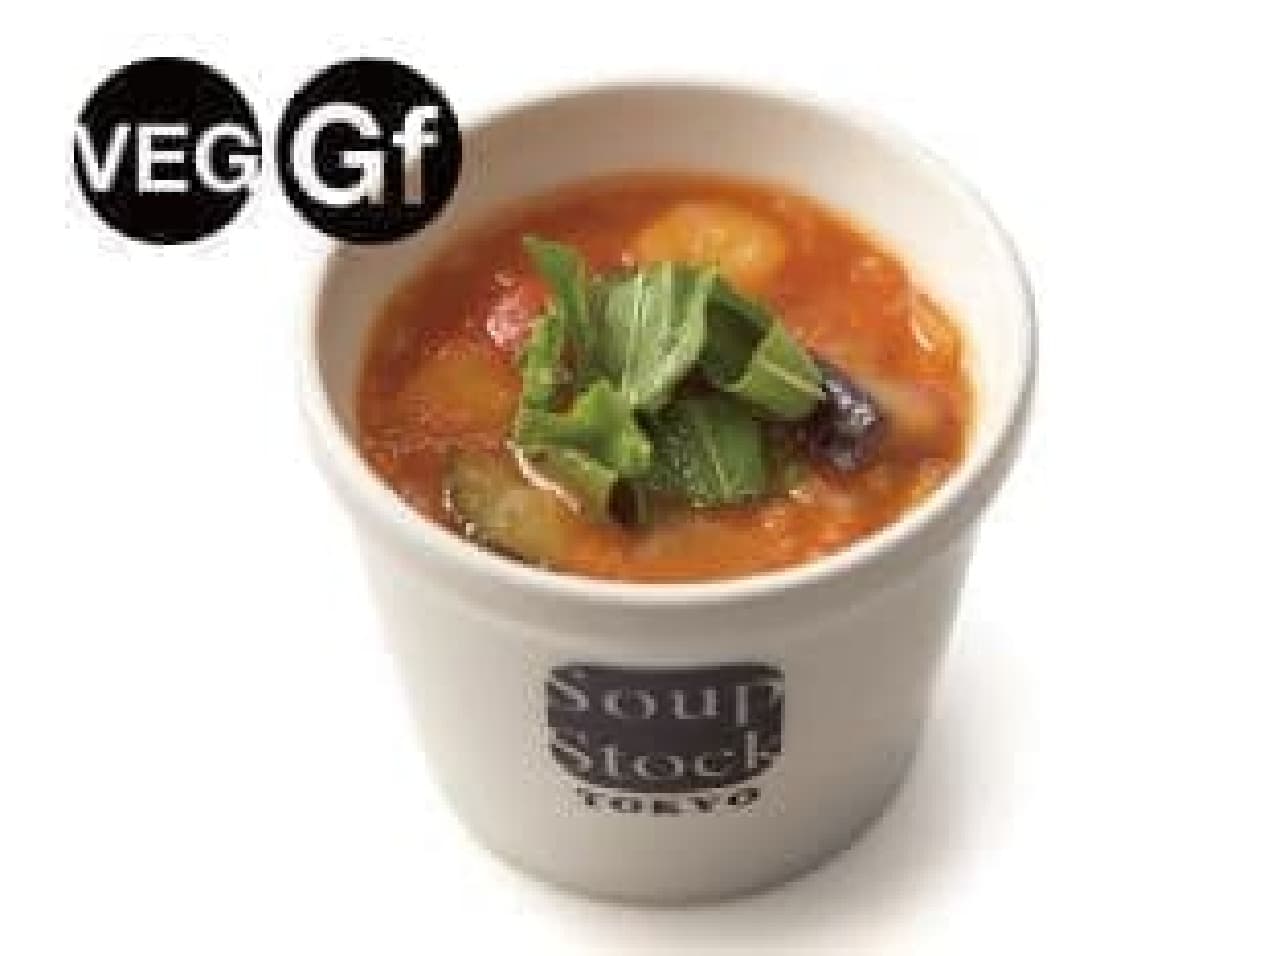 Soup Stock Tokyo "Italian Tomato Minestrone"